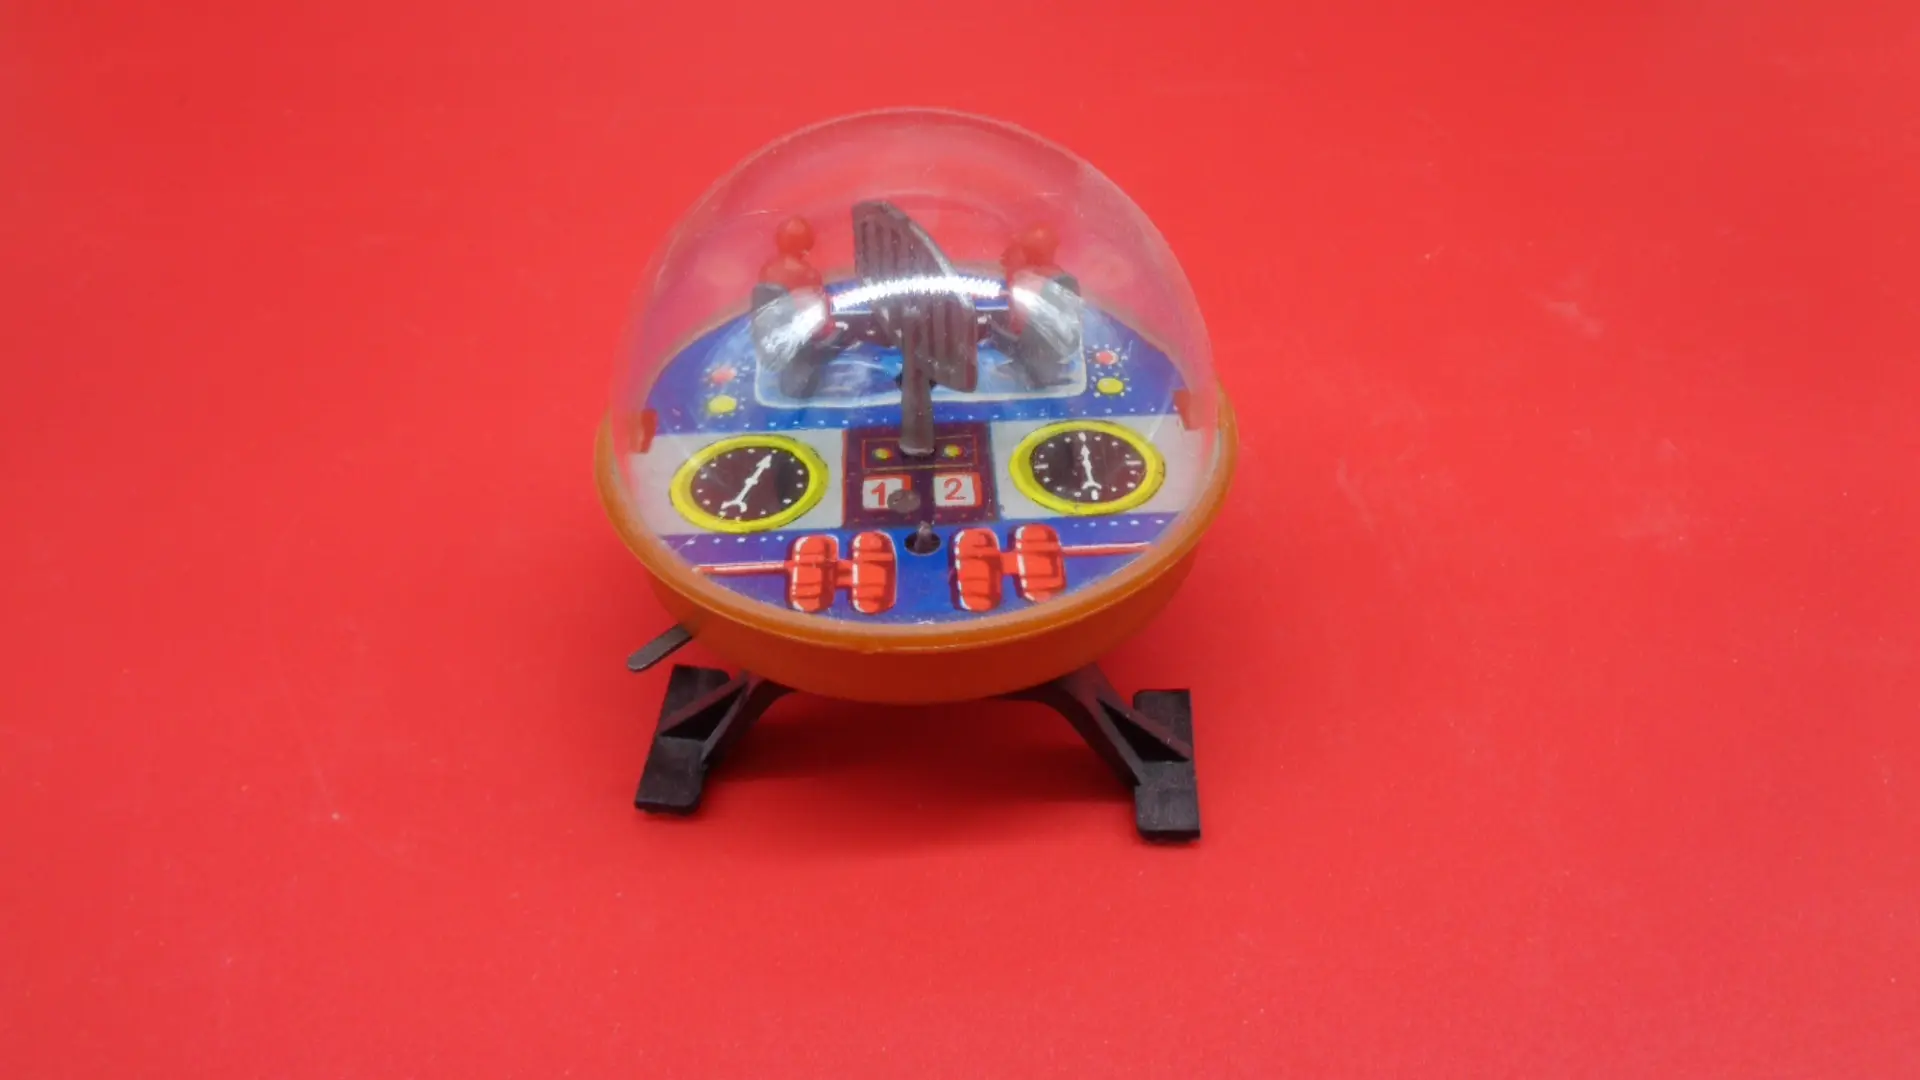 Miniature wind-up spaceship